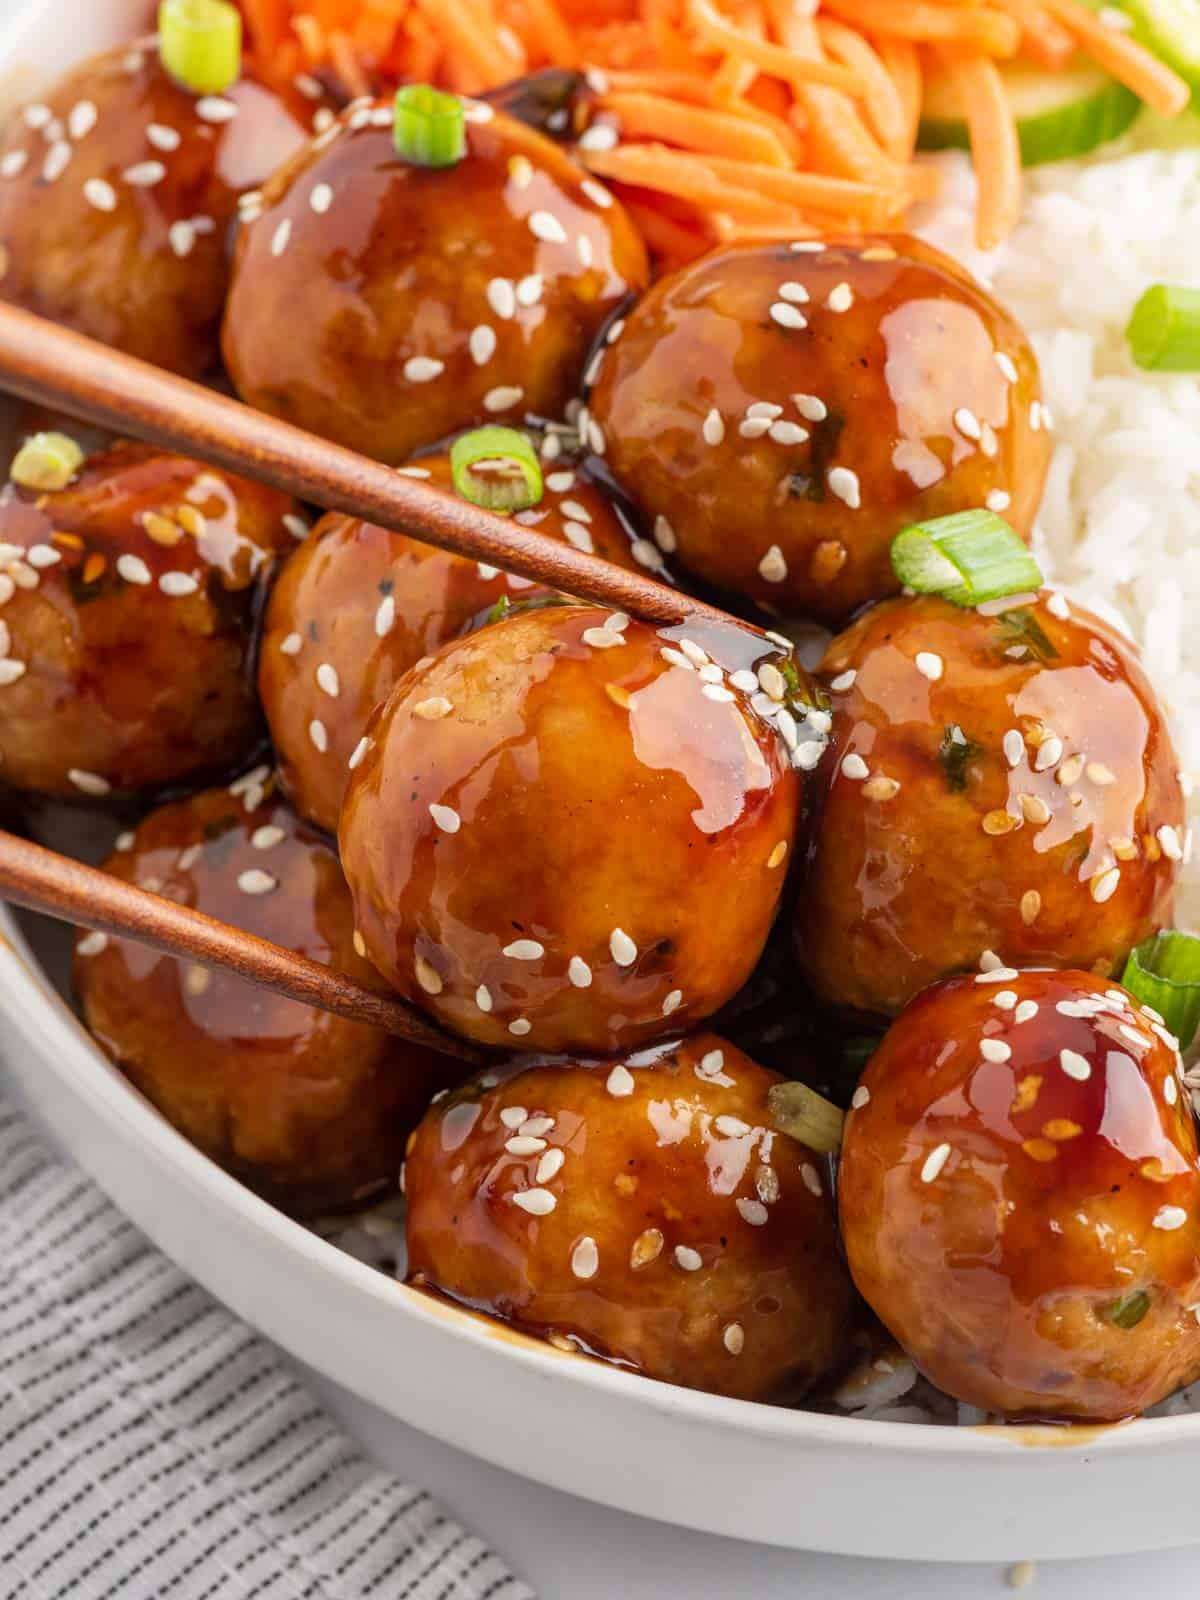 Chopsticks pick up a meatball coated in teriyaki sauce.